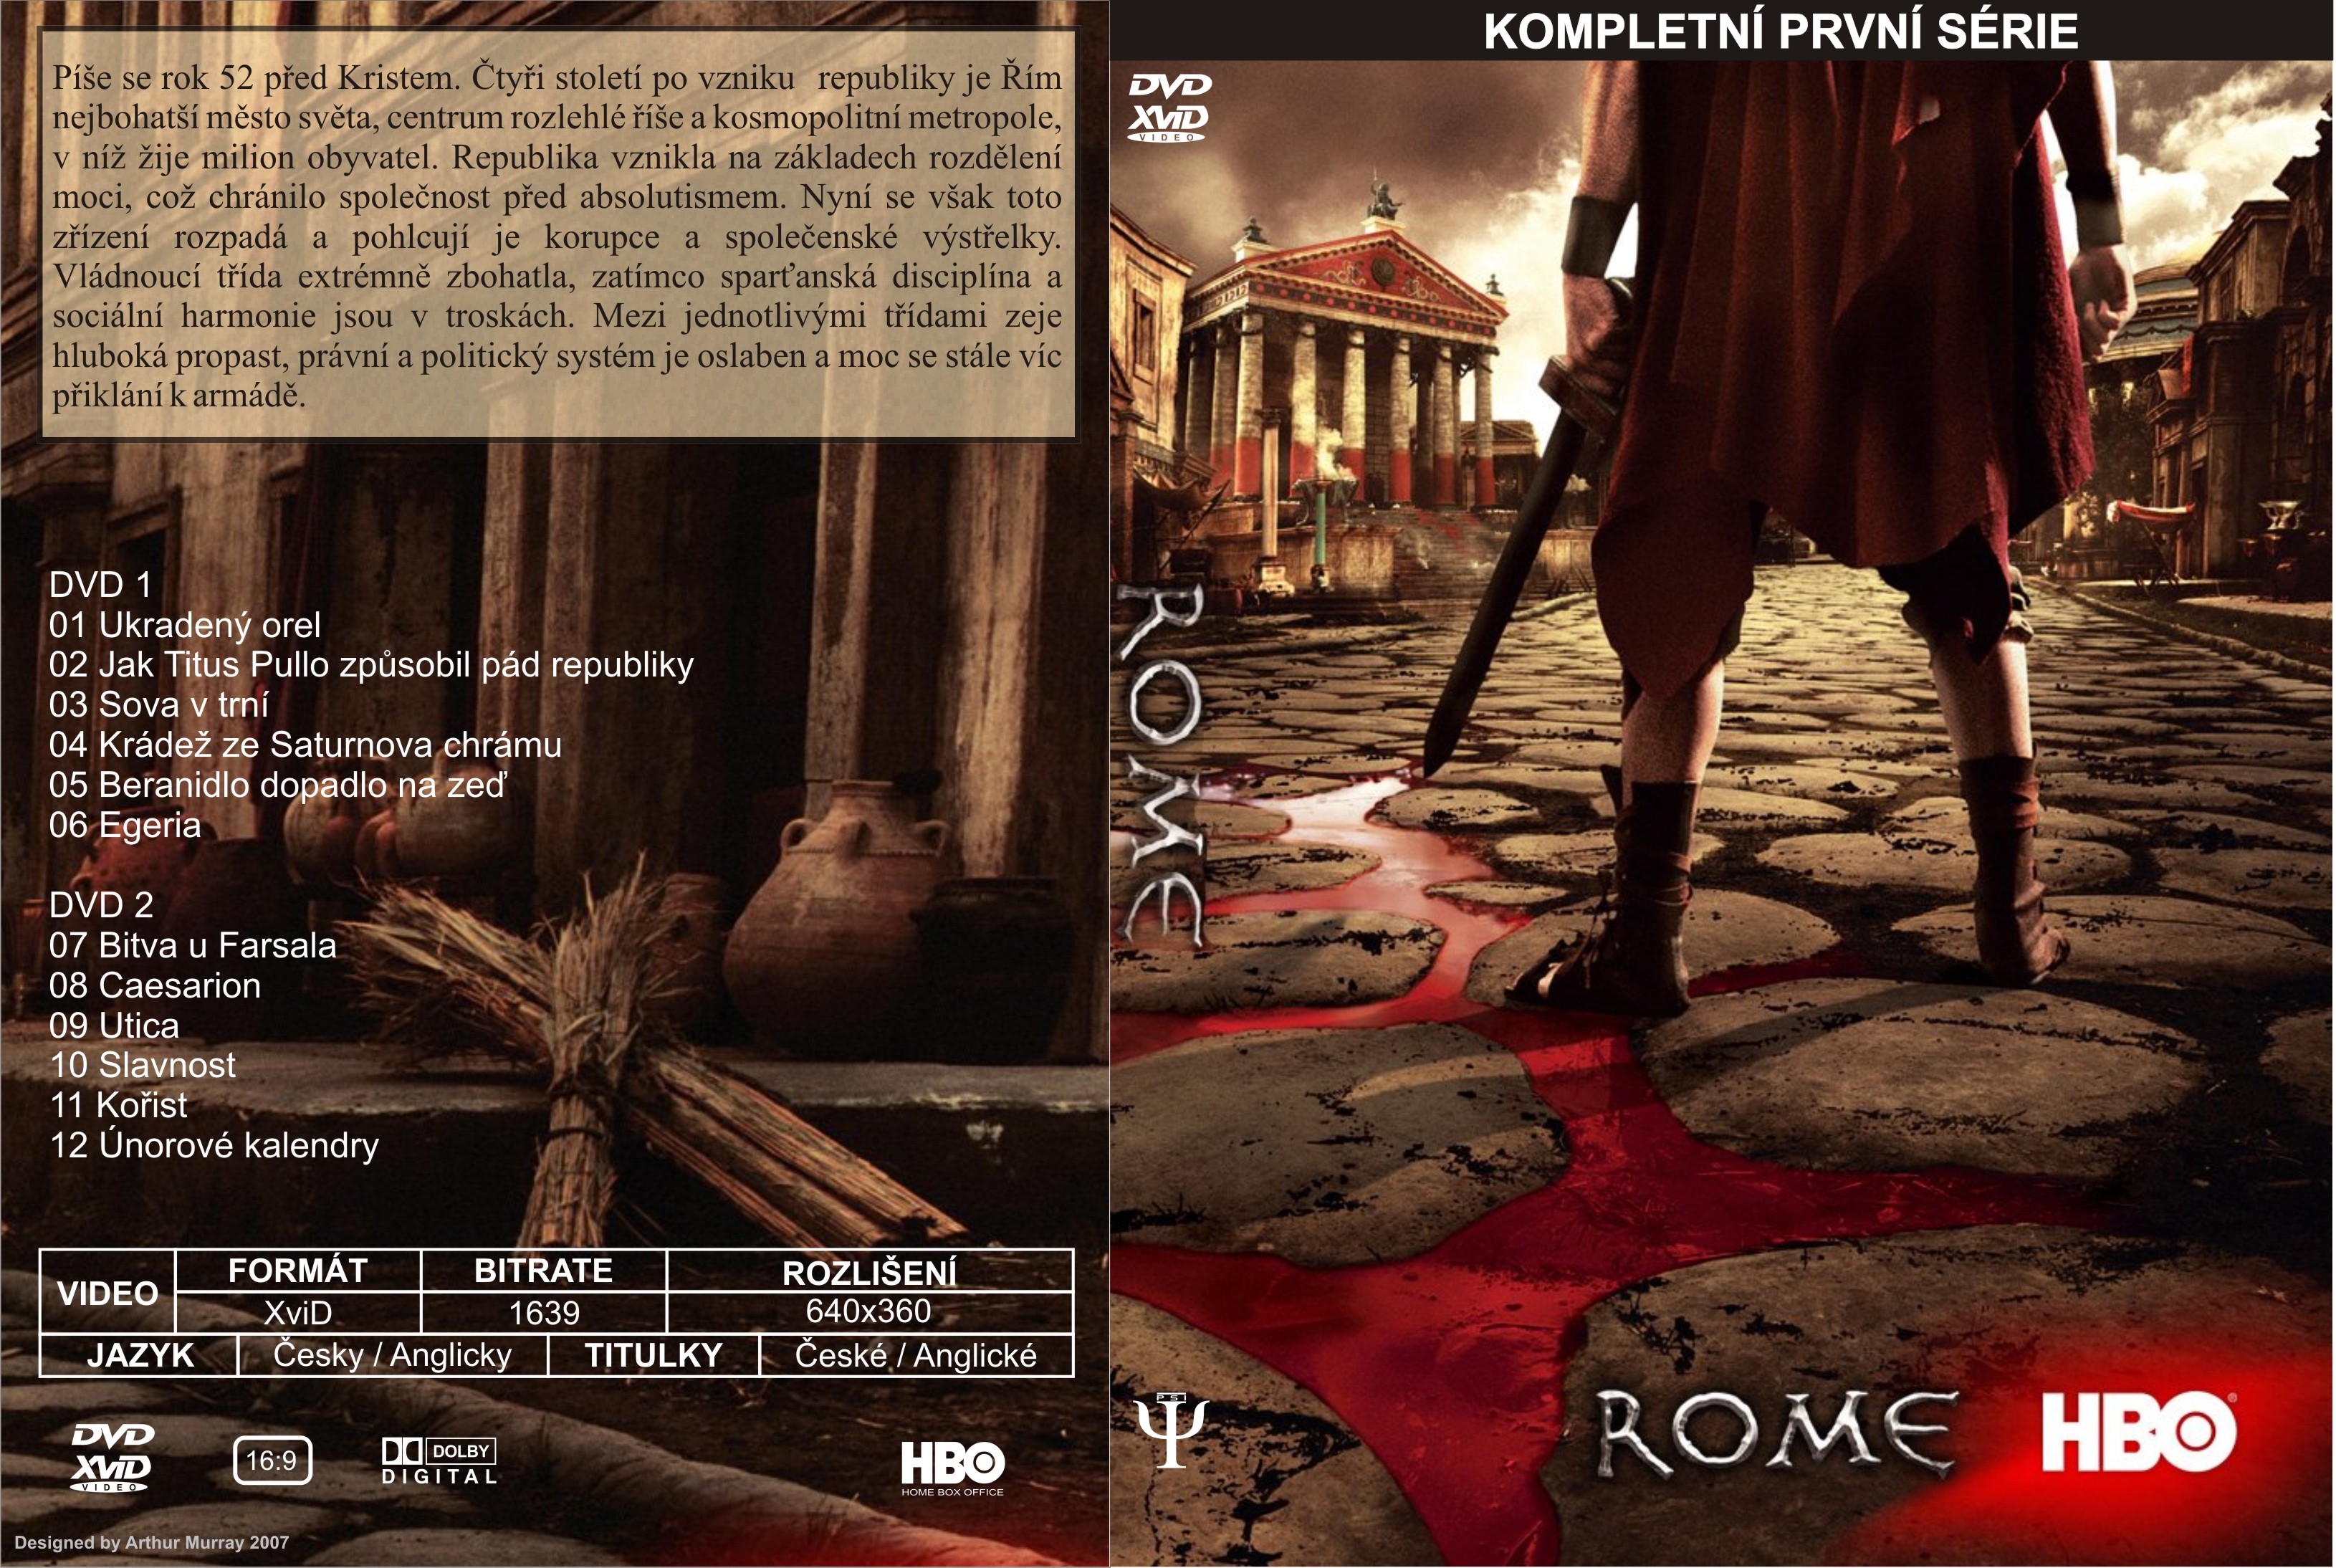 Rome TV series - Wikipedia